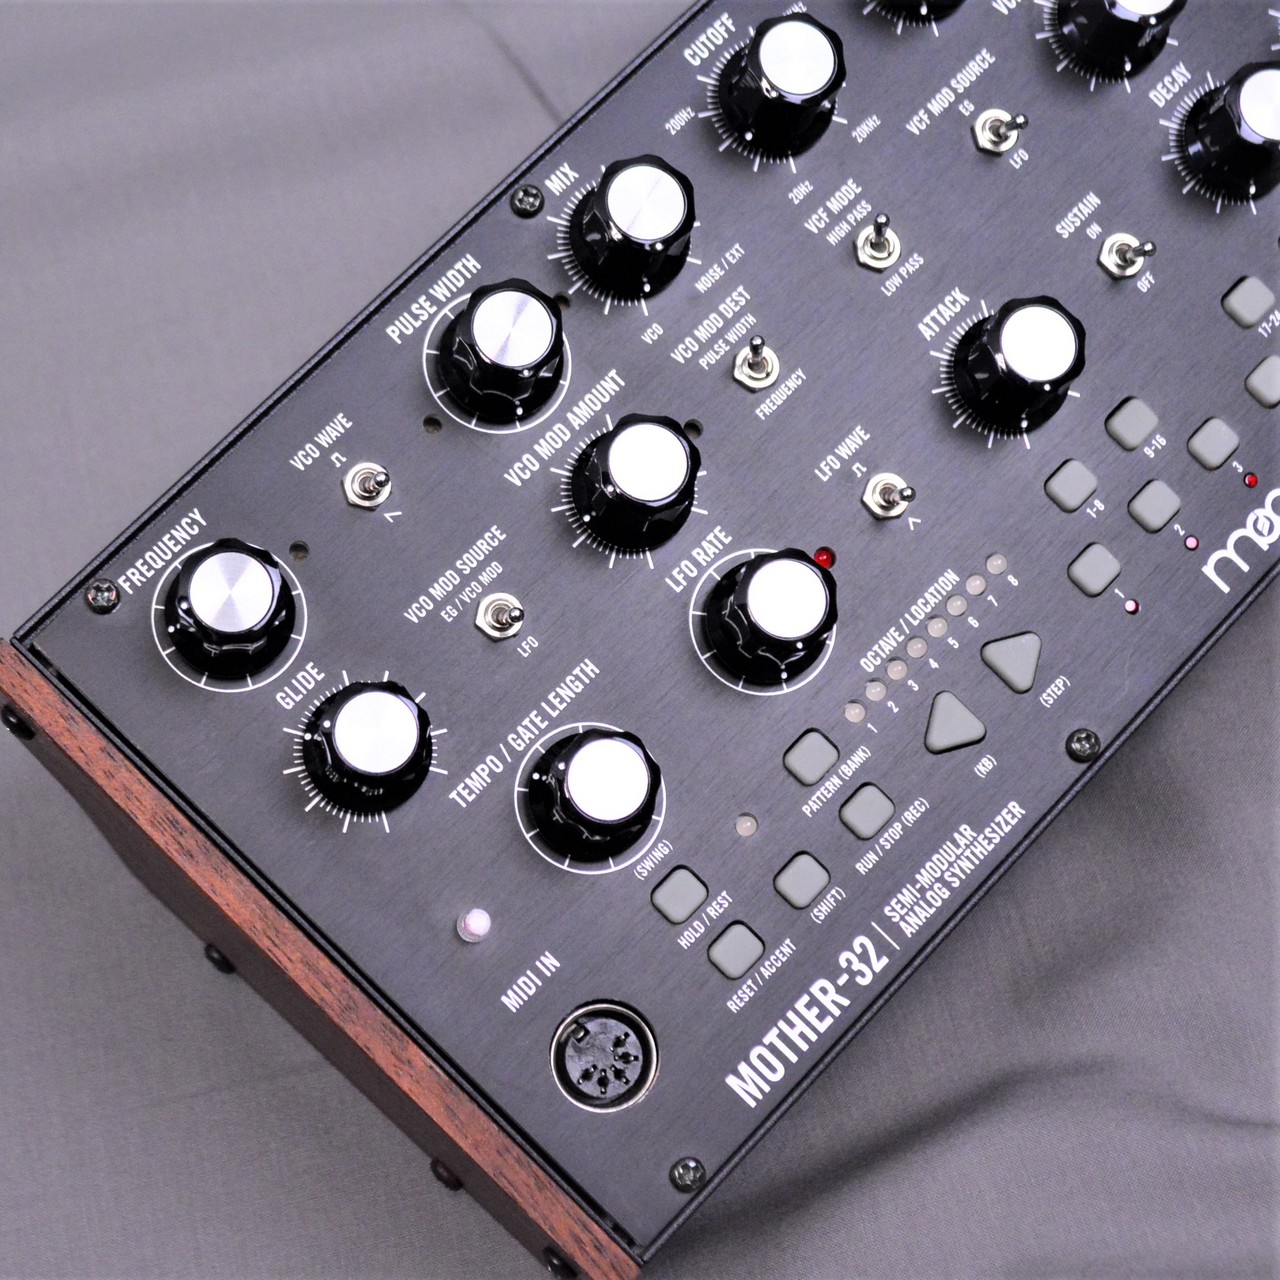 MOOG Mother-32 セミモジュラーシンセサイザー デジタル楽器 | www